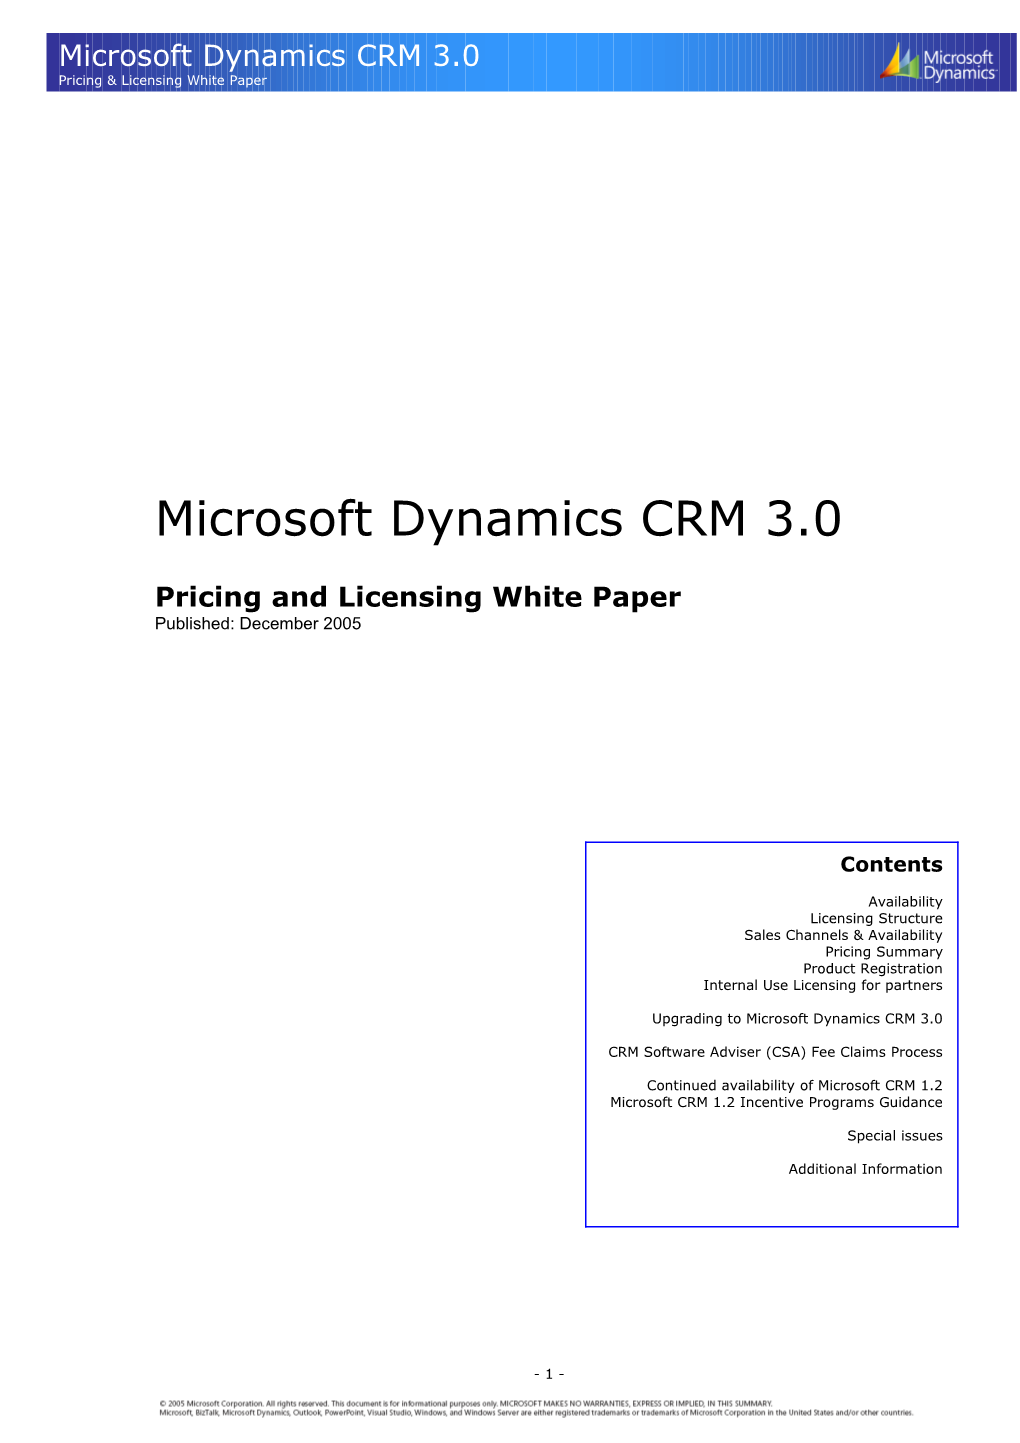 Microsoft Dynamics CRM 3.0 Pricing & Licensing